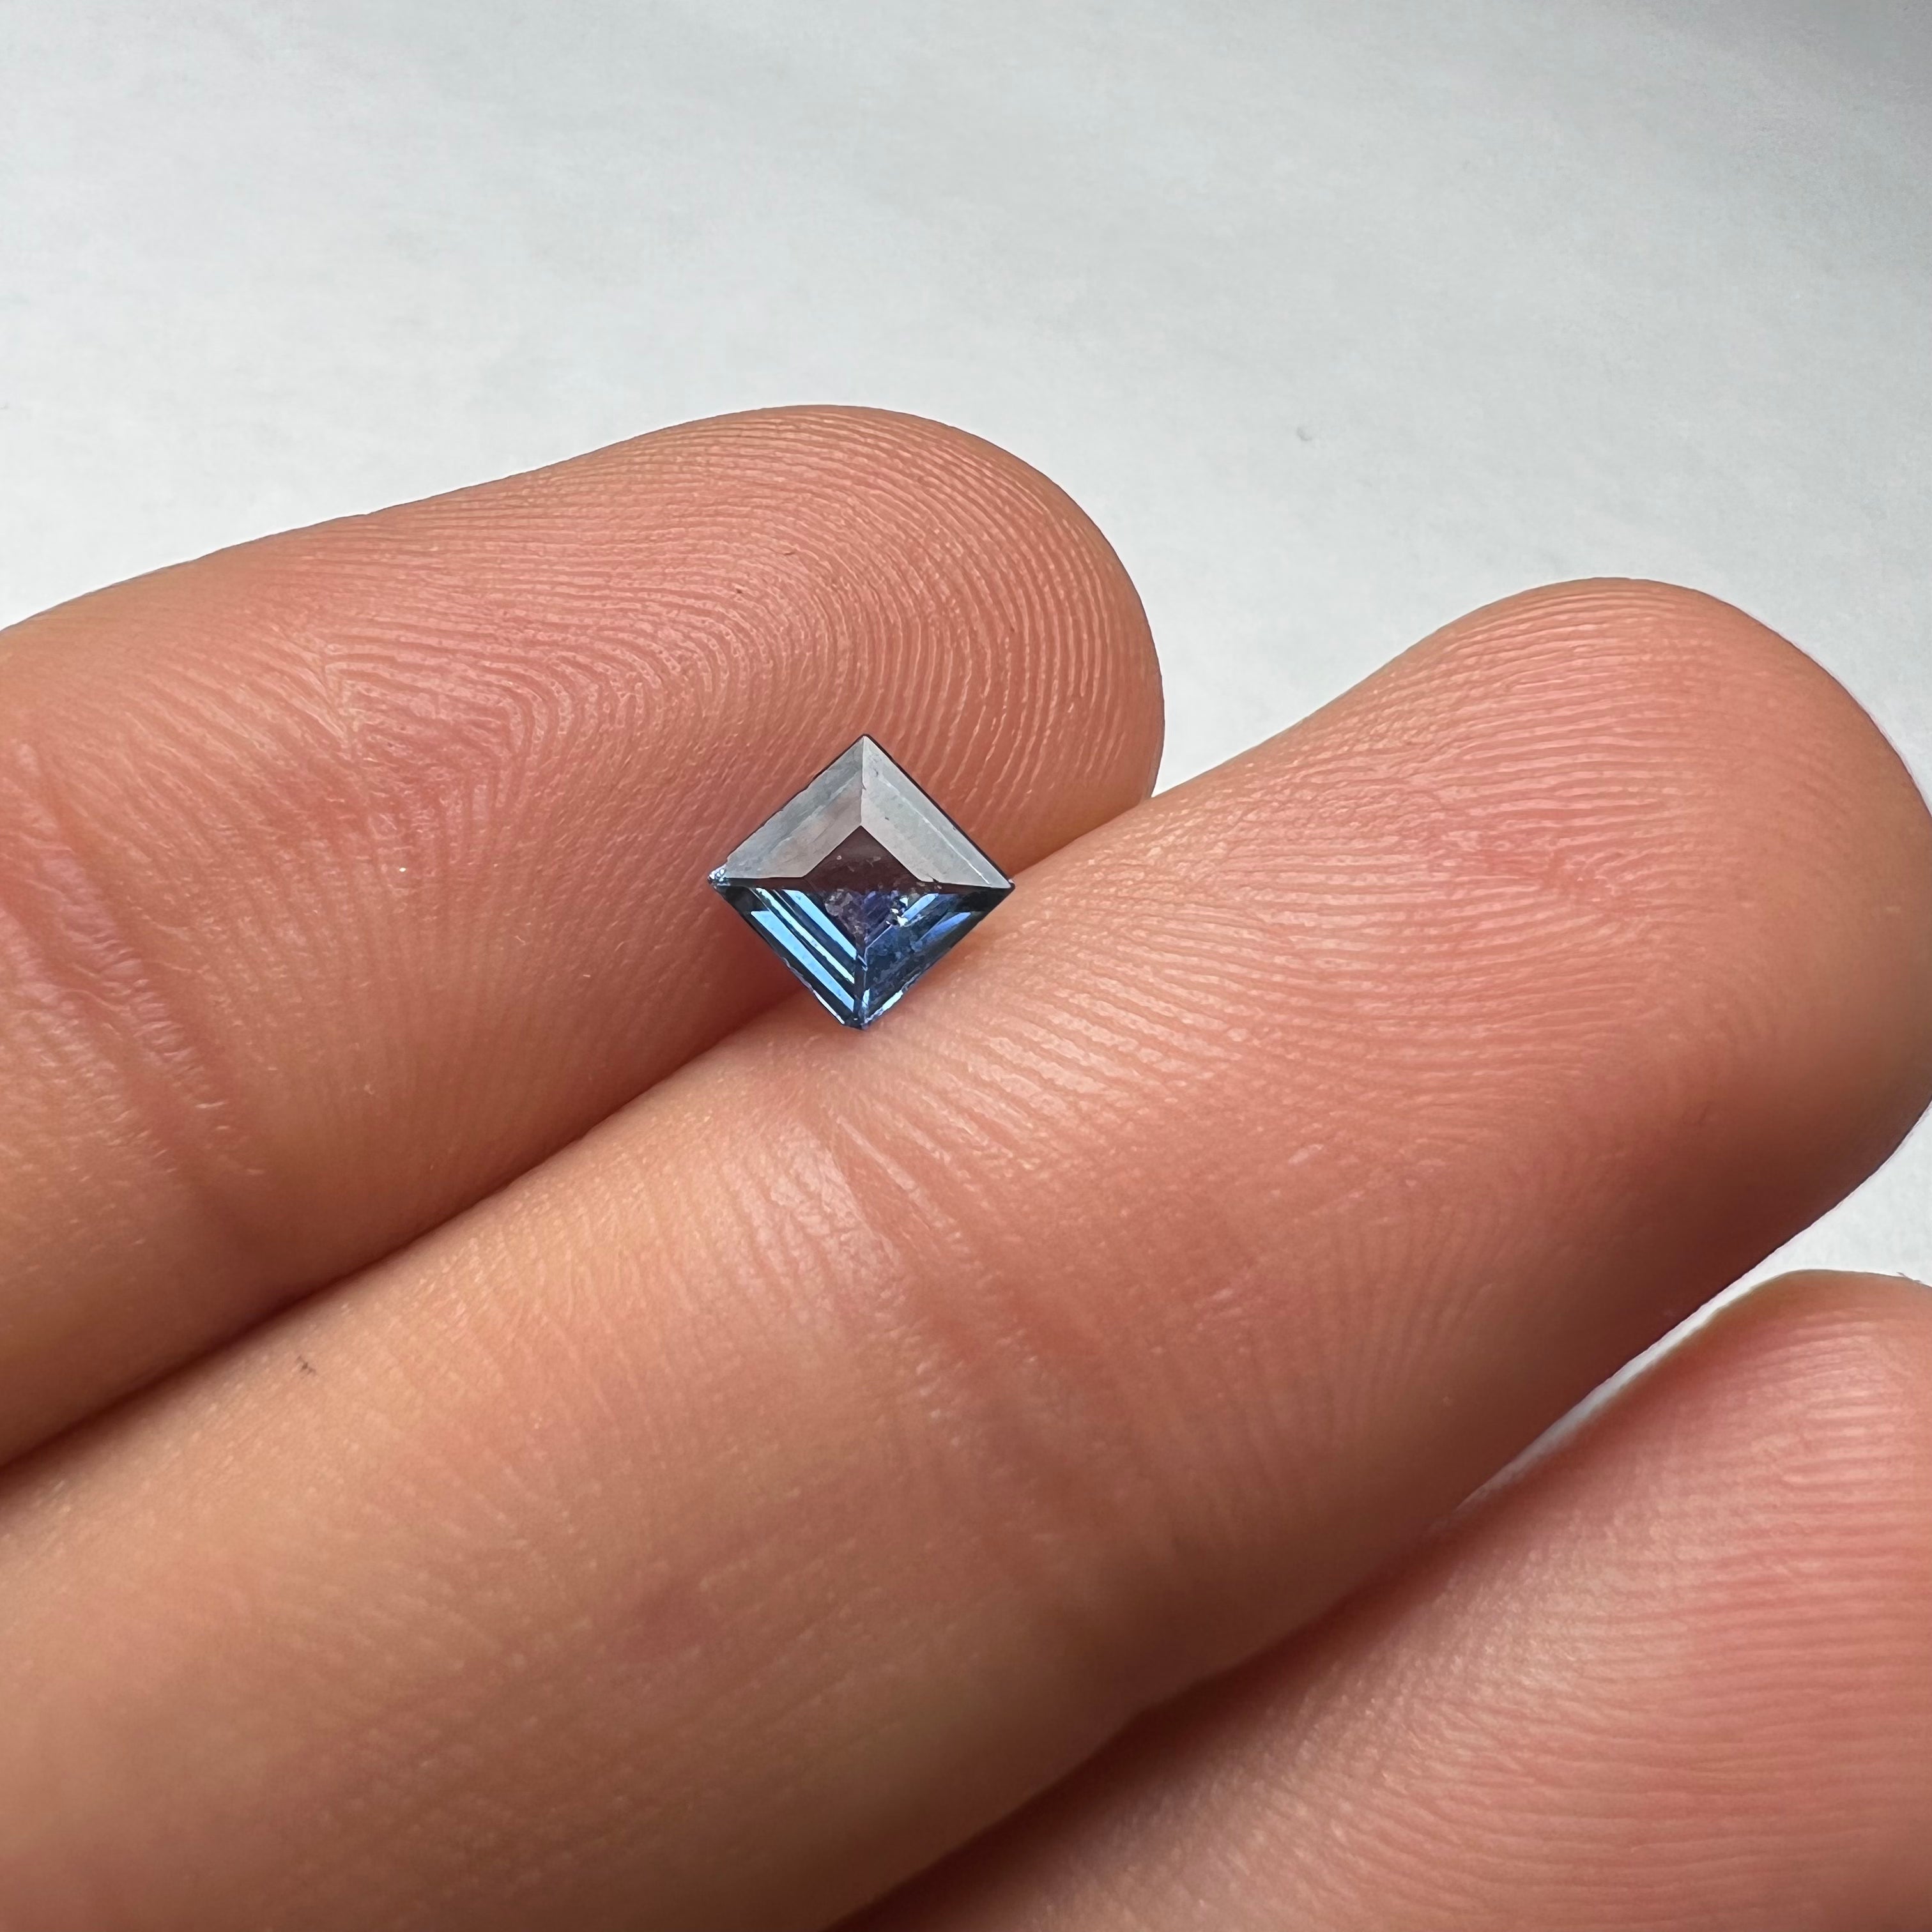 .40CT Loose Blue Emerald Cut Sapphire 4x2mm Earth mined Gemstone